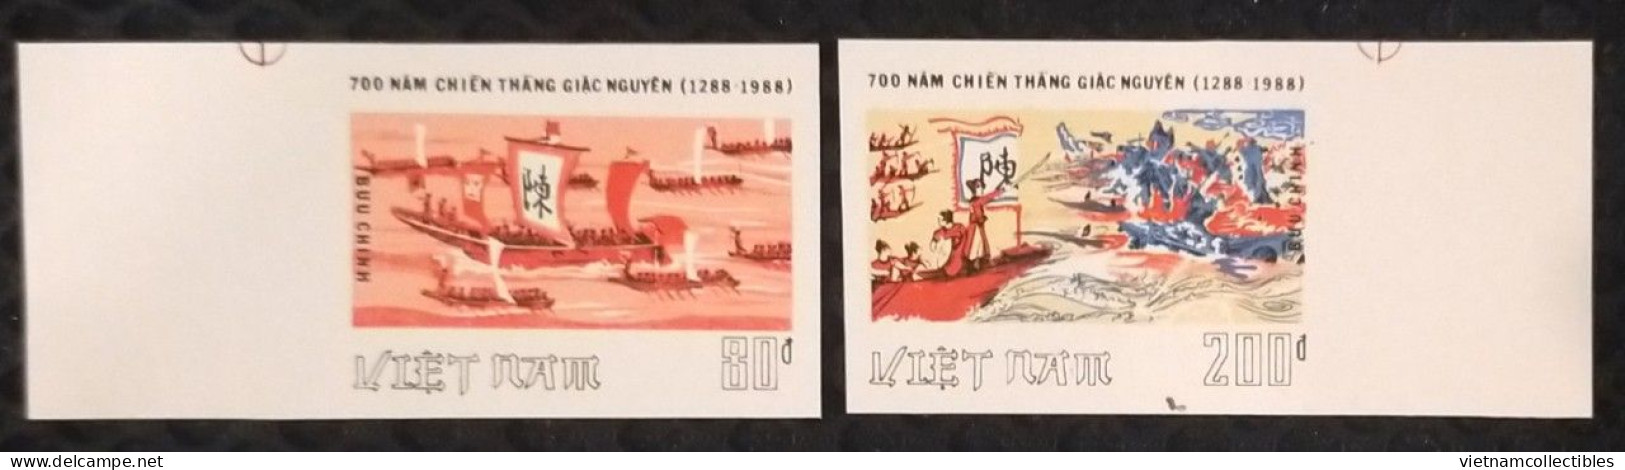 Vietnam Viet Nam MNH Imperf Stamps 1988 : 700th Anniversary Of Bach Dang Battle Against China (Ms540) - Viêt-Nam